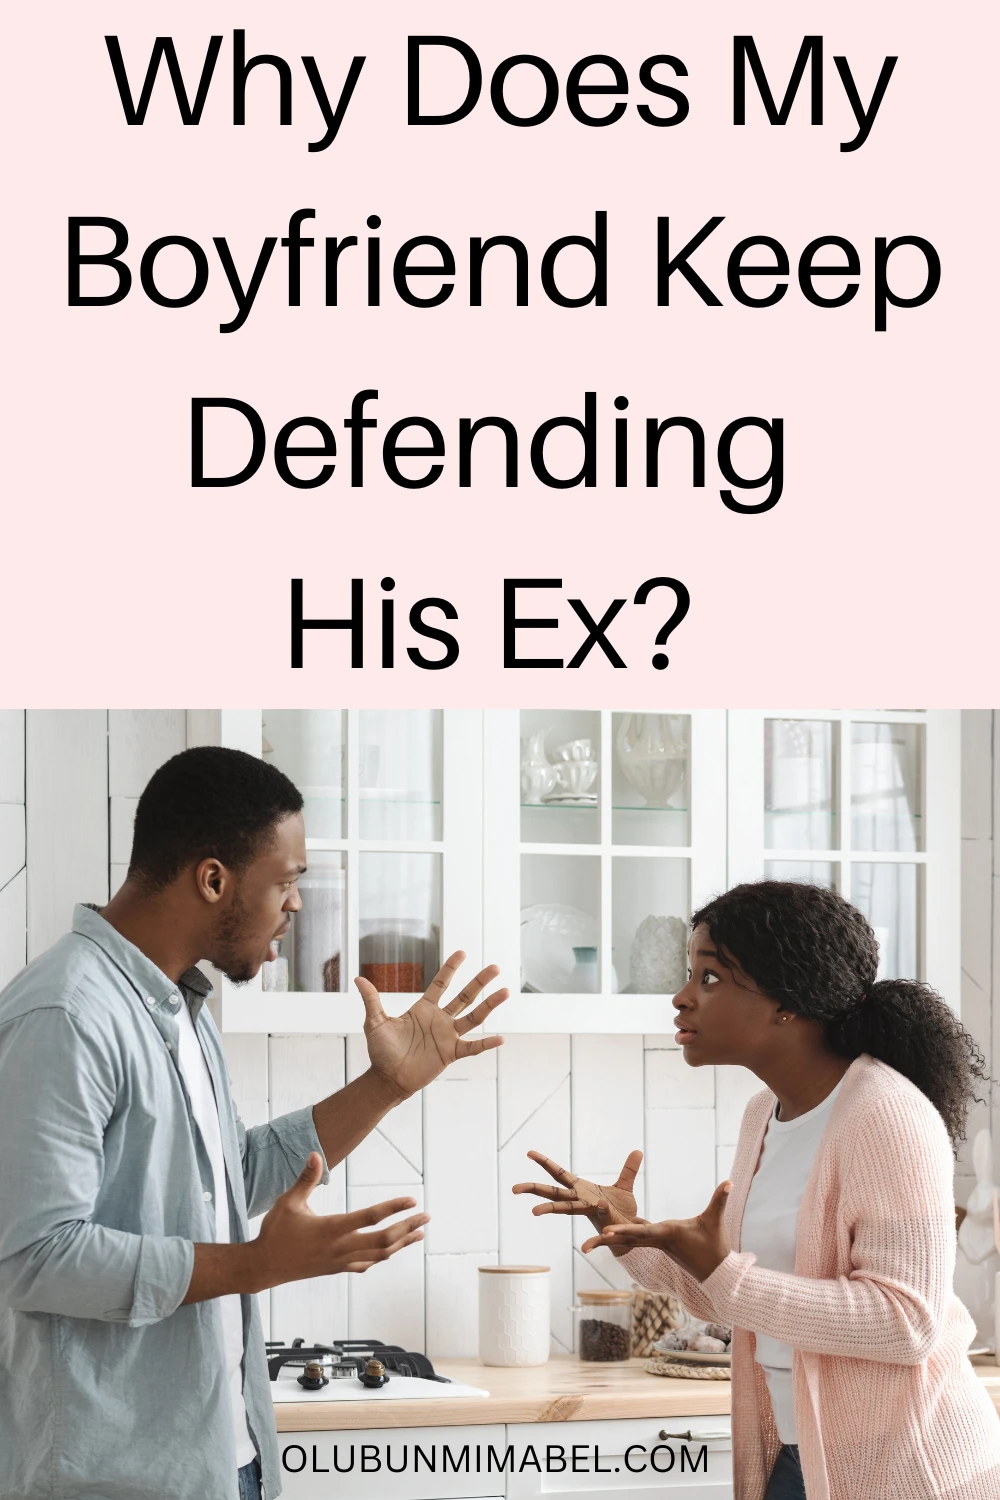 Why Does My Boyfriend Defend His Ex?